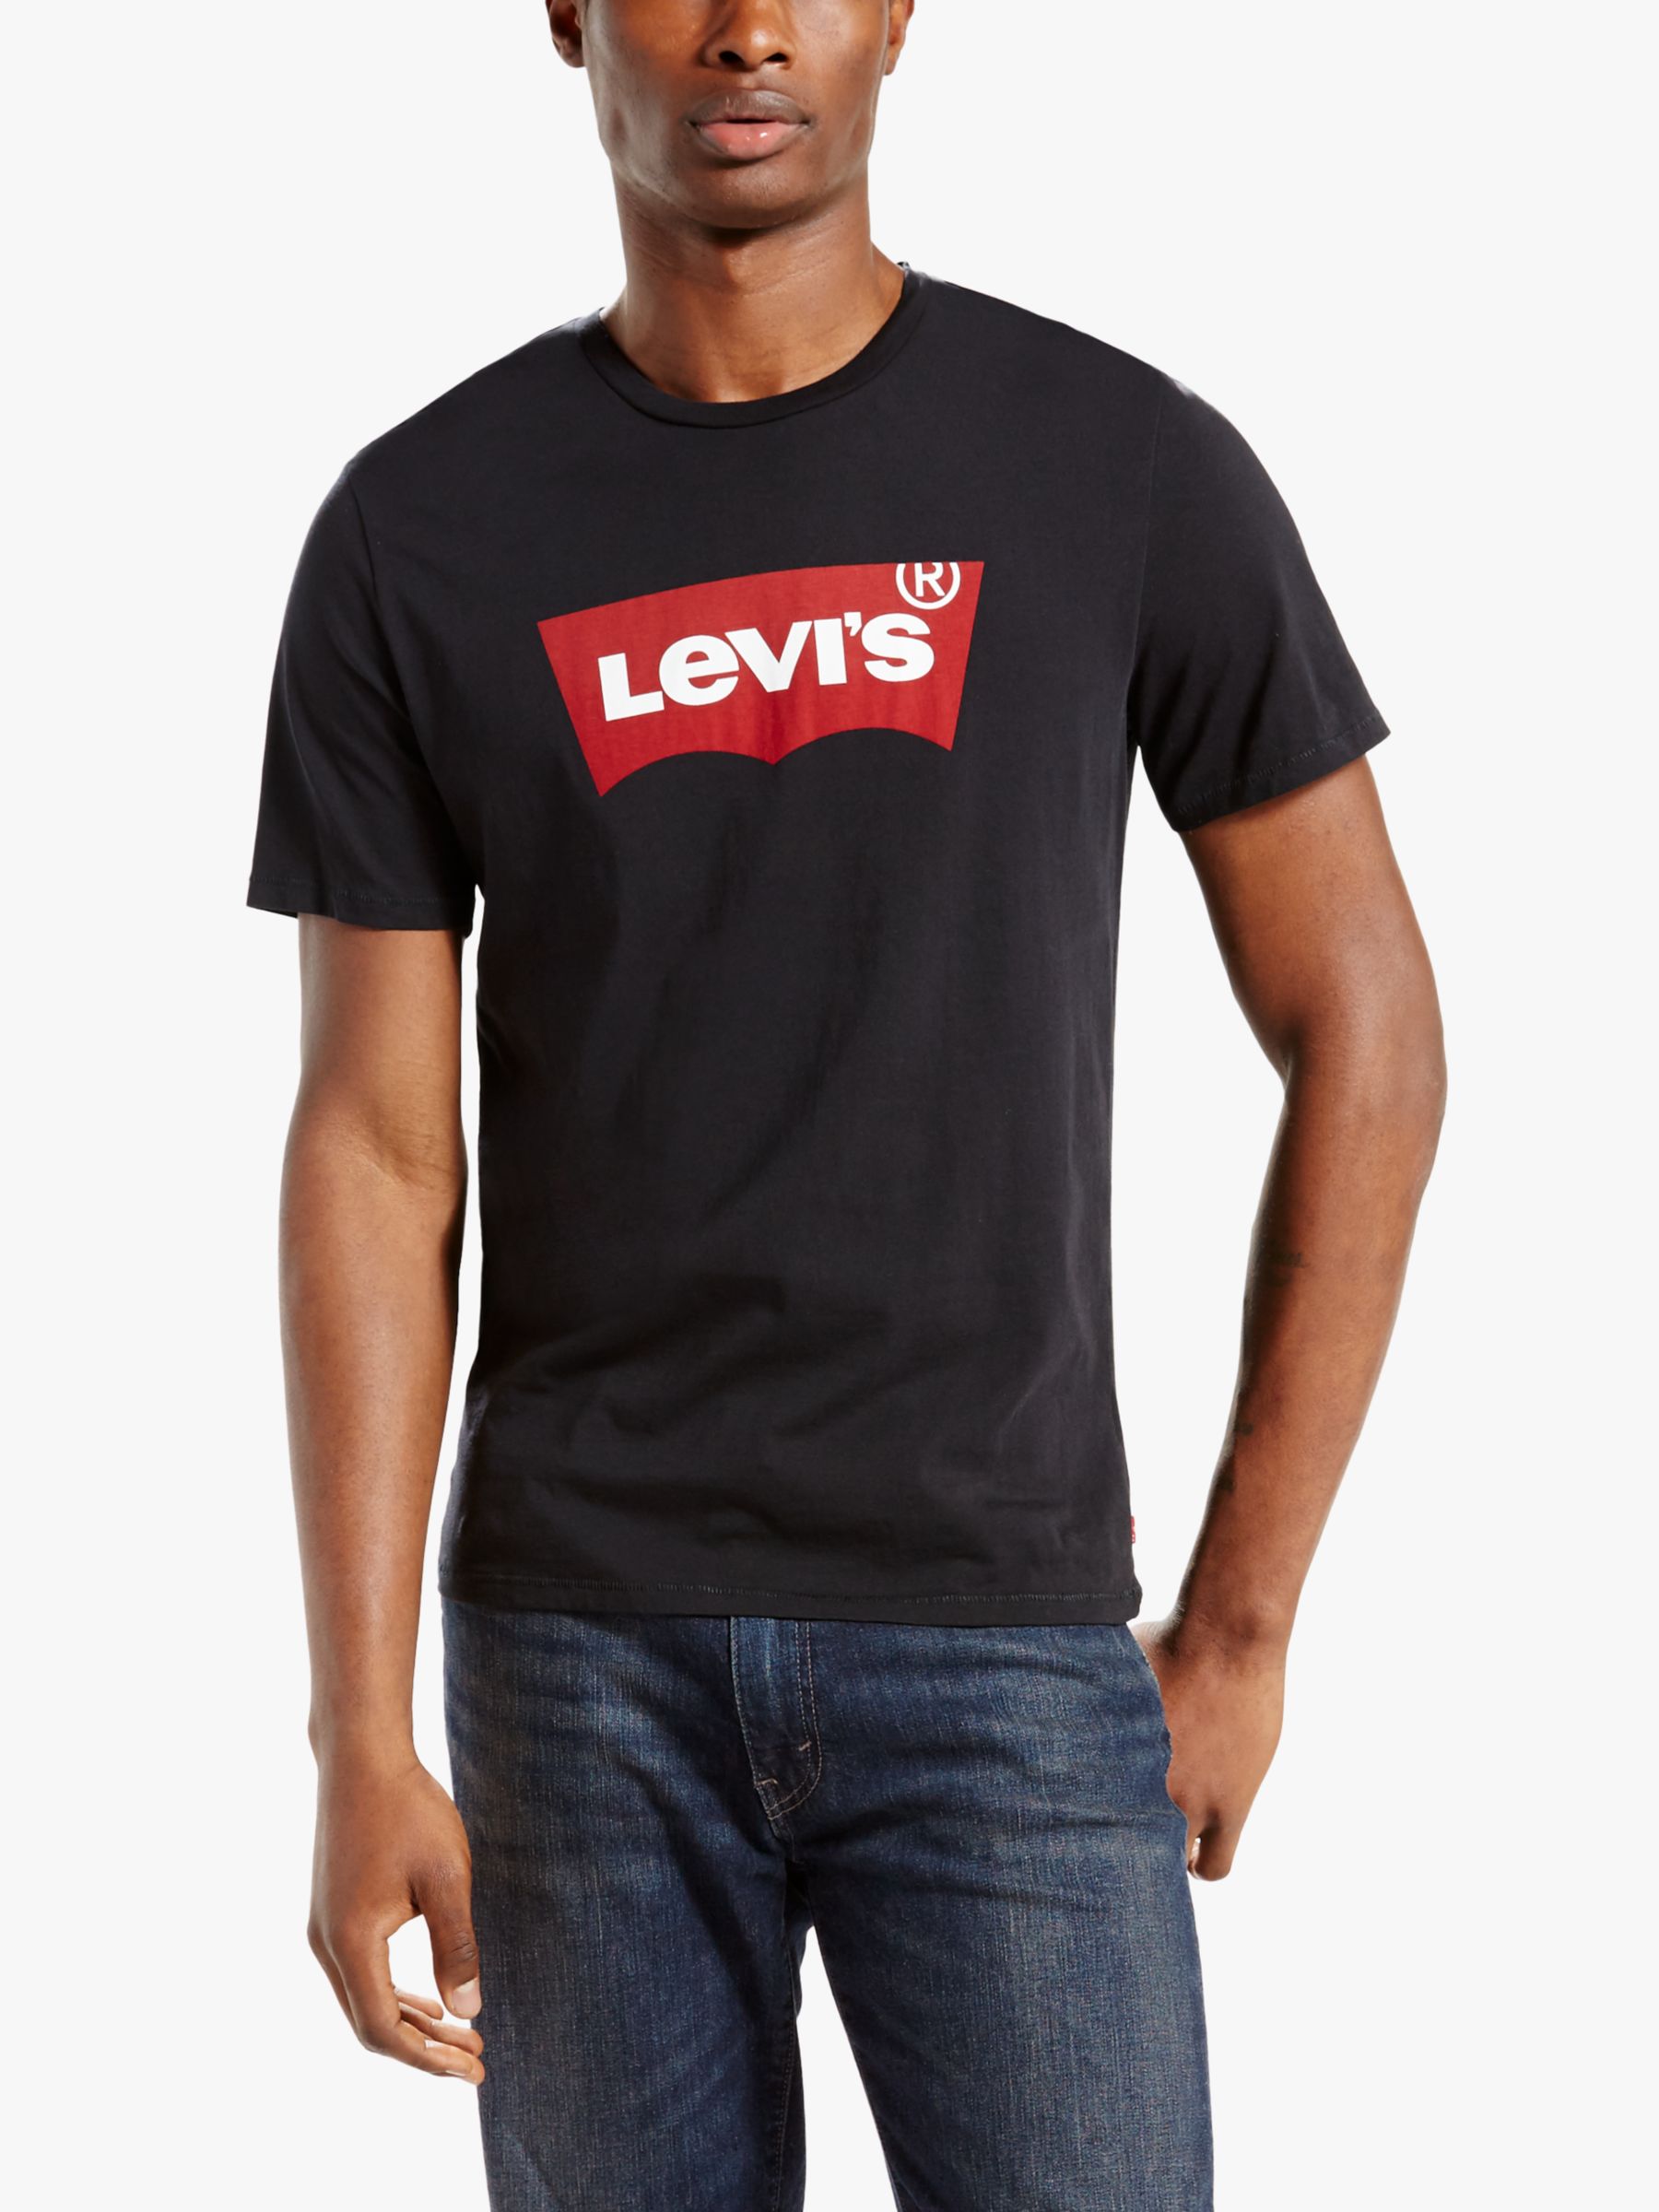 Men's Levi's | John Lewis Partners